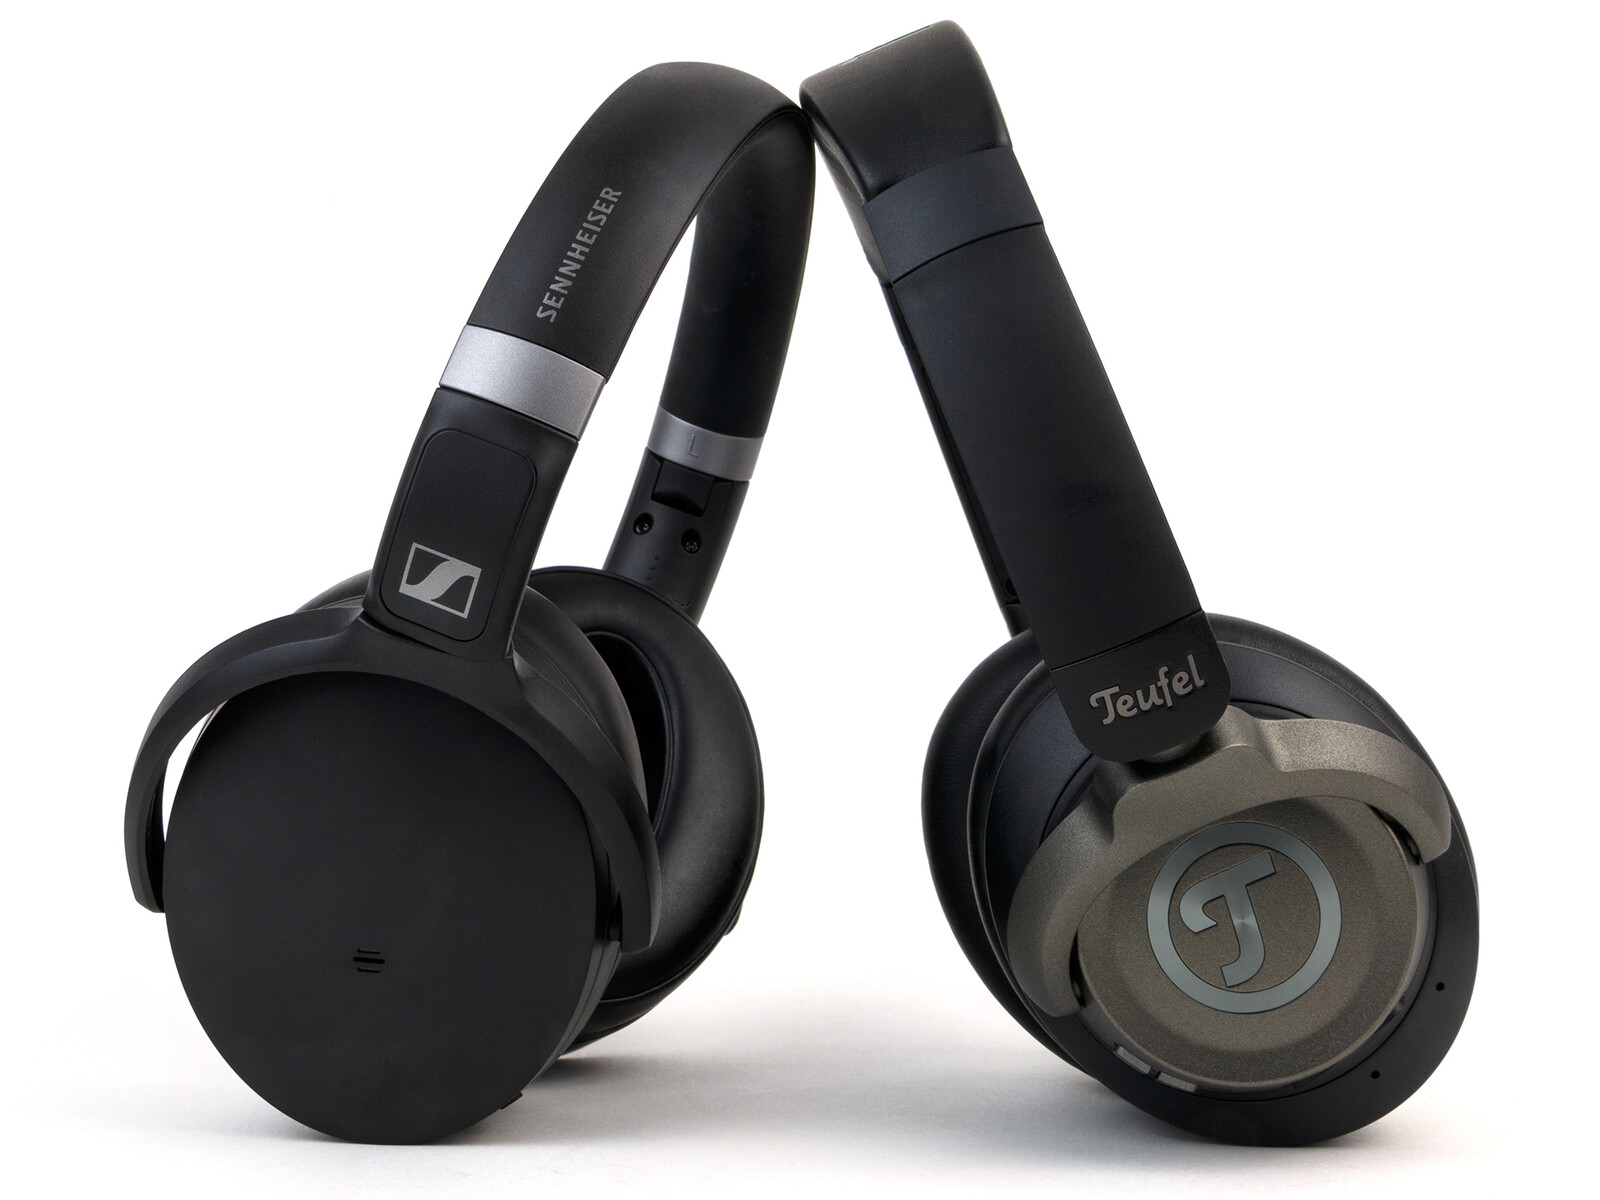 Sennheiser HD 450BT Black Wireless Headphones with ANC